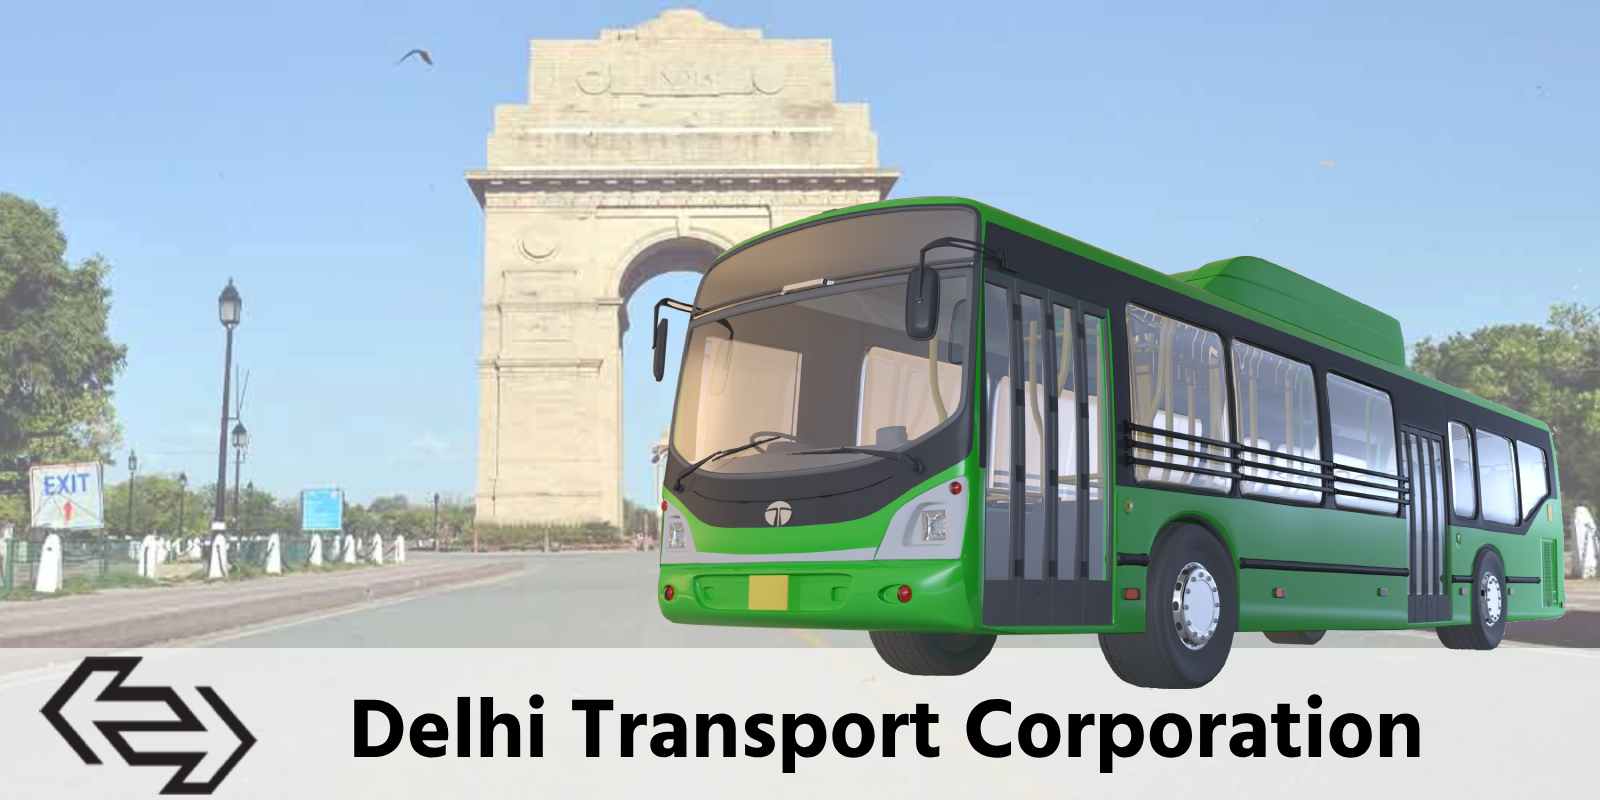 DTC Bus: Delhi Transport Corporation